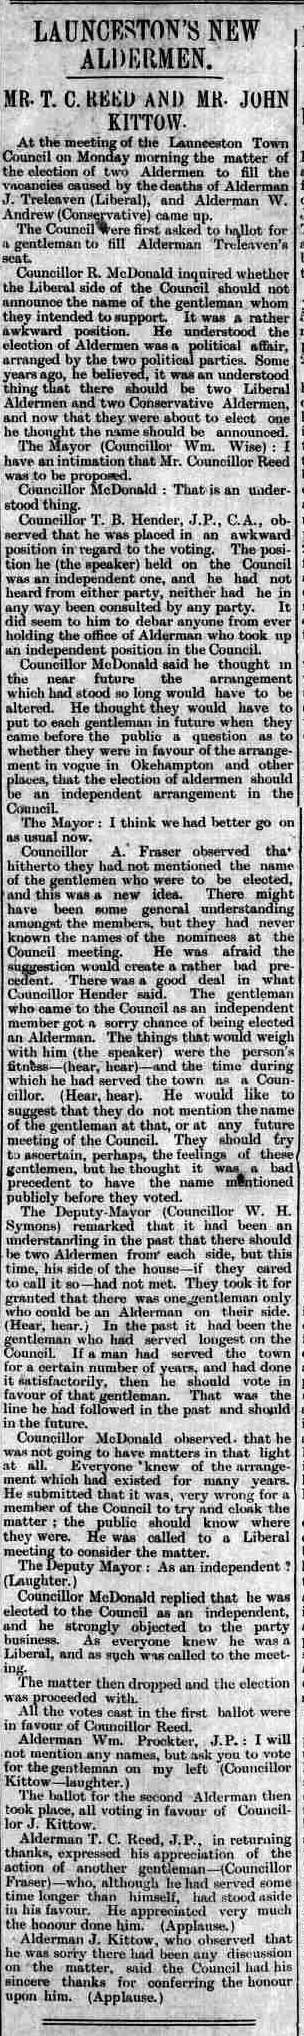 Launceston's new aldermen 25 February 1911